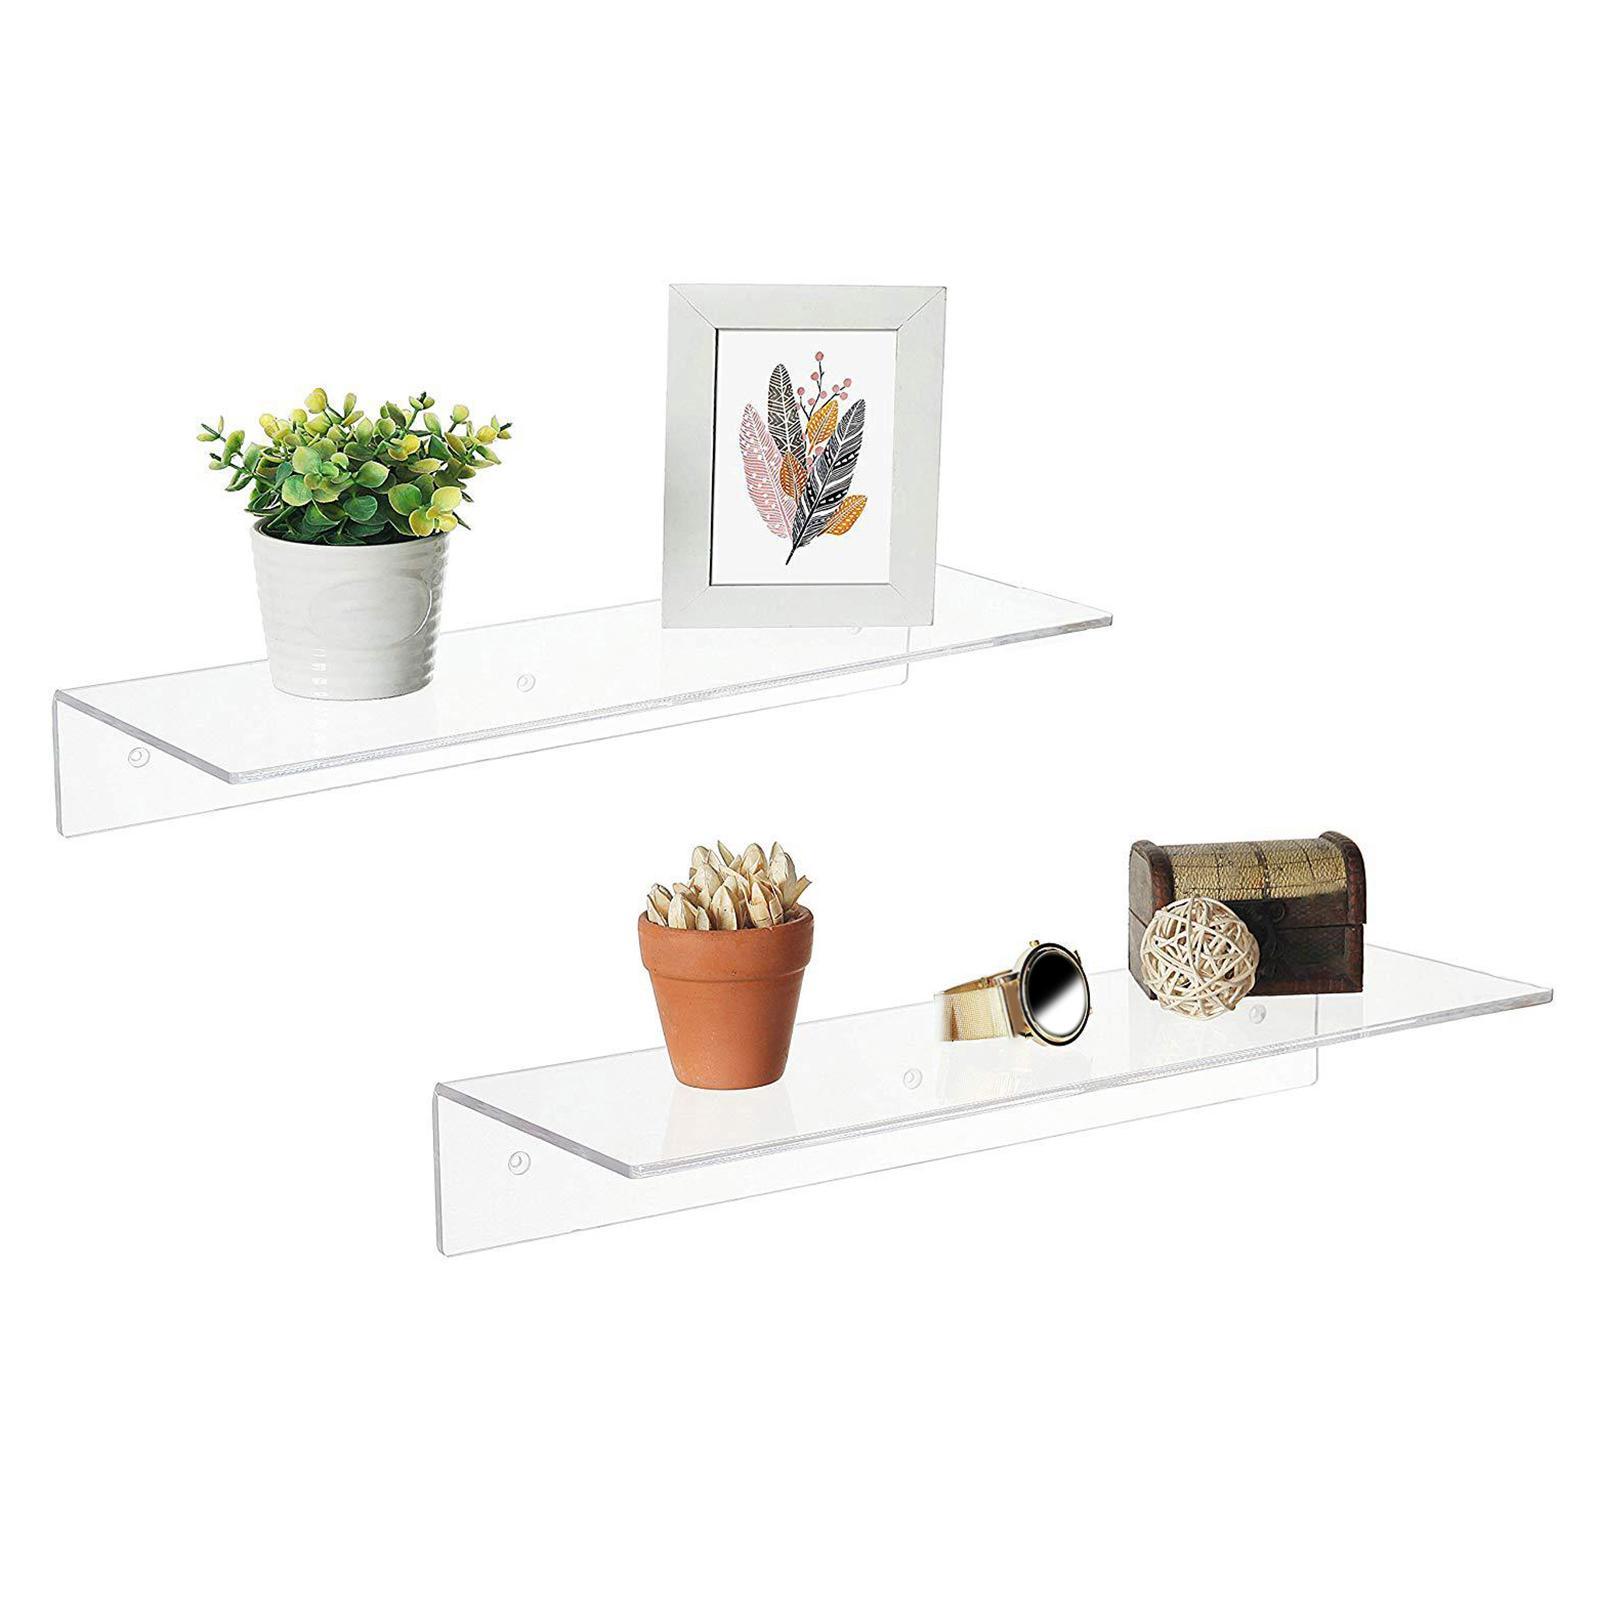 Acrylic Storage Shelf Book Shelf Holder Decoration for Bathroom Home Office